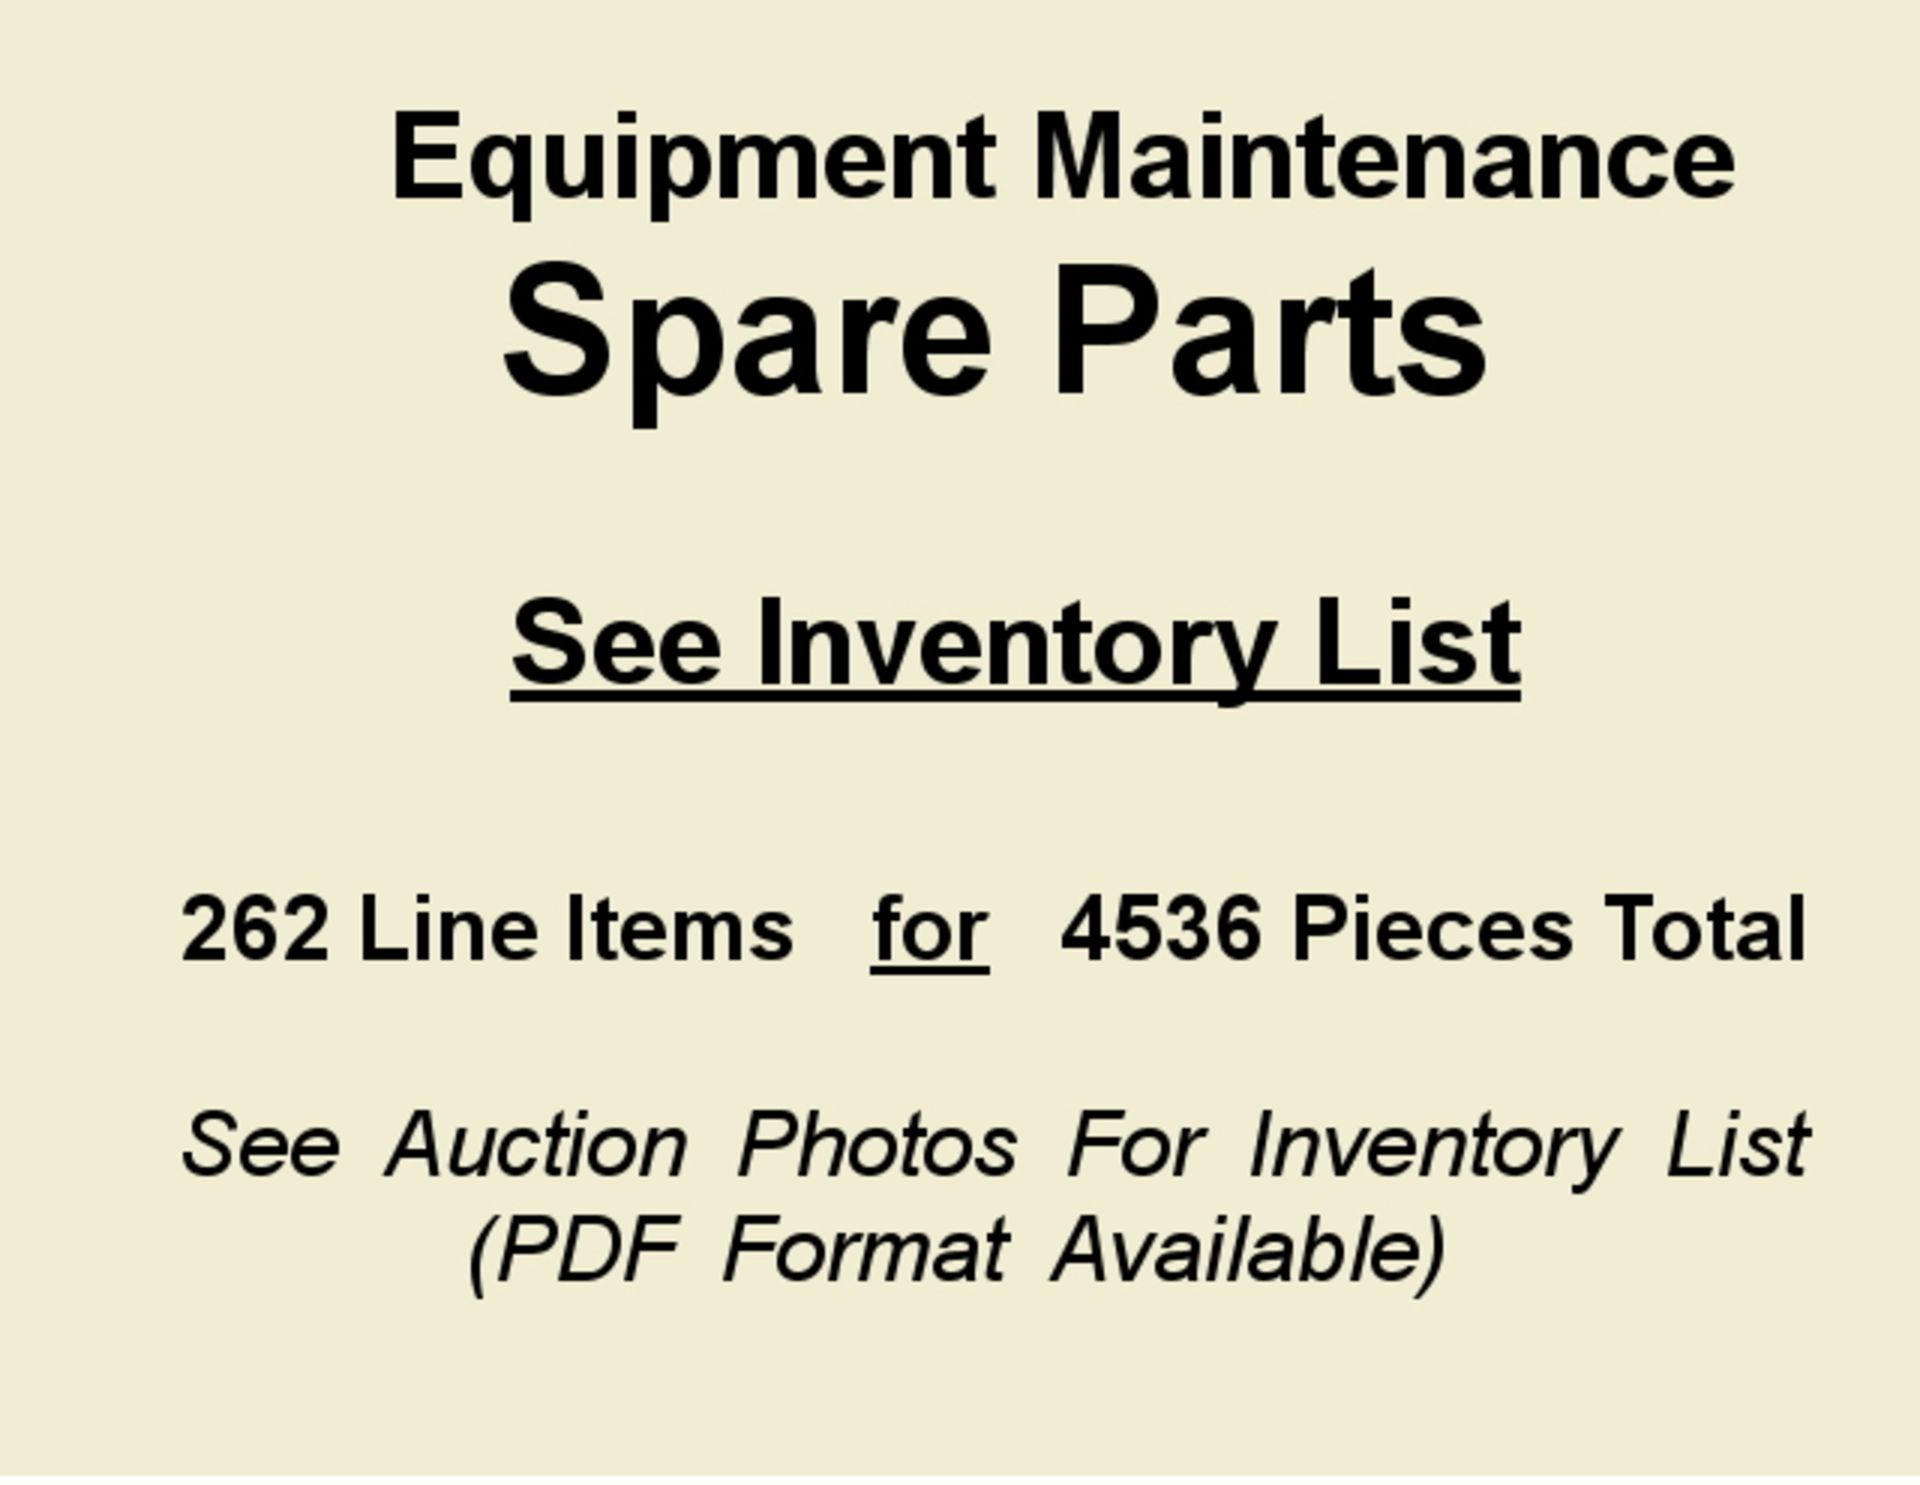 Equipment Maintenance Spare Parts